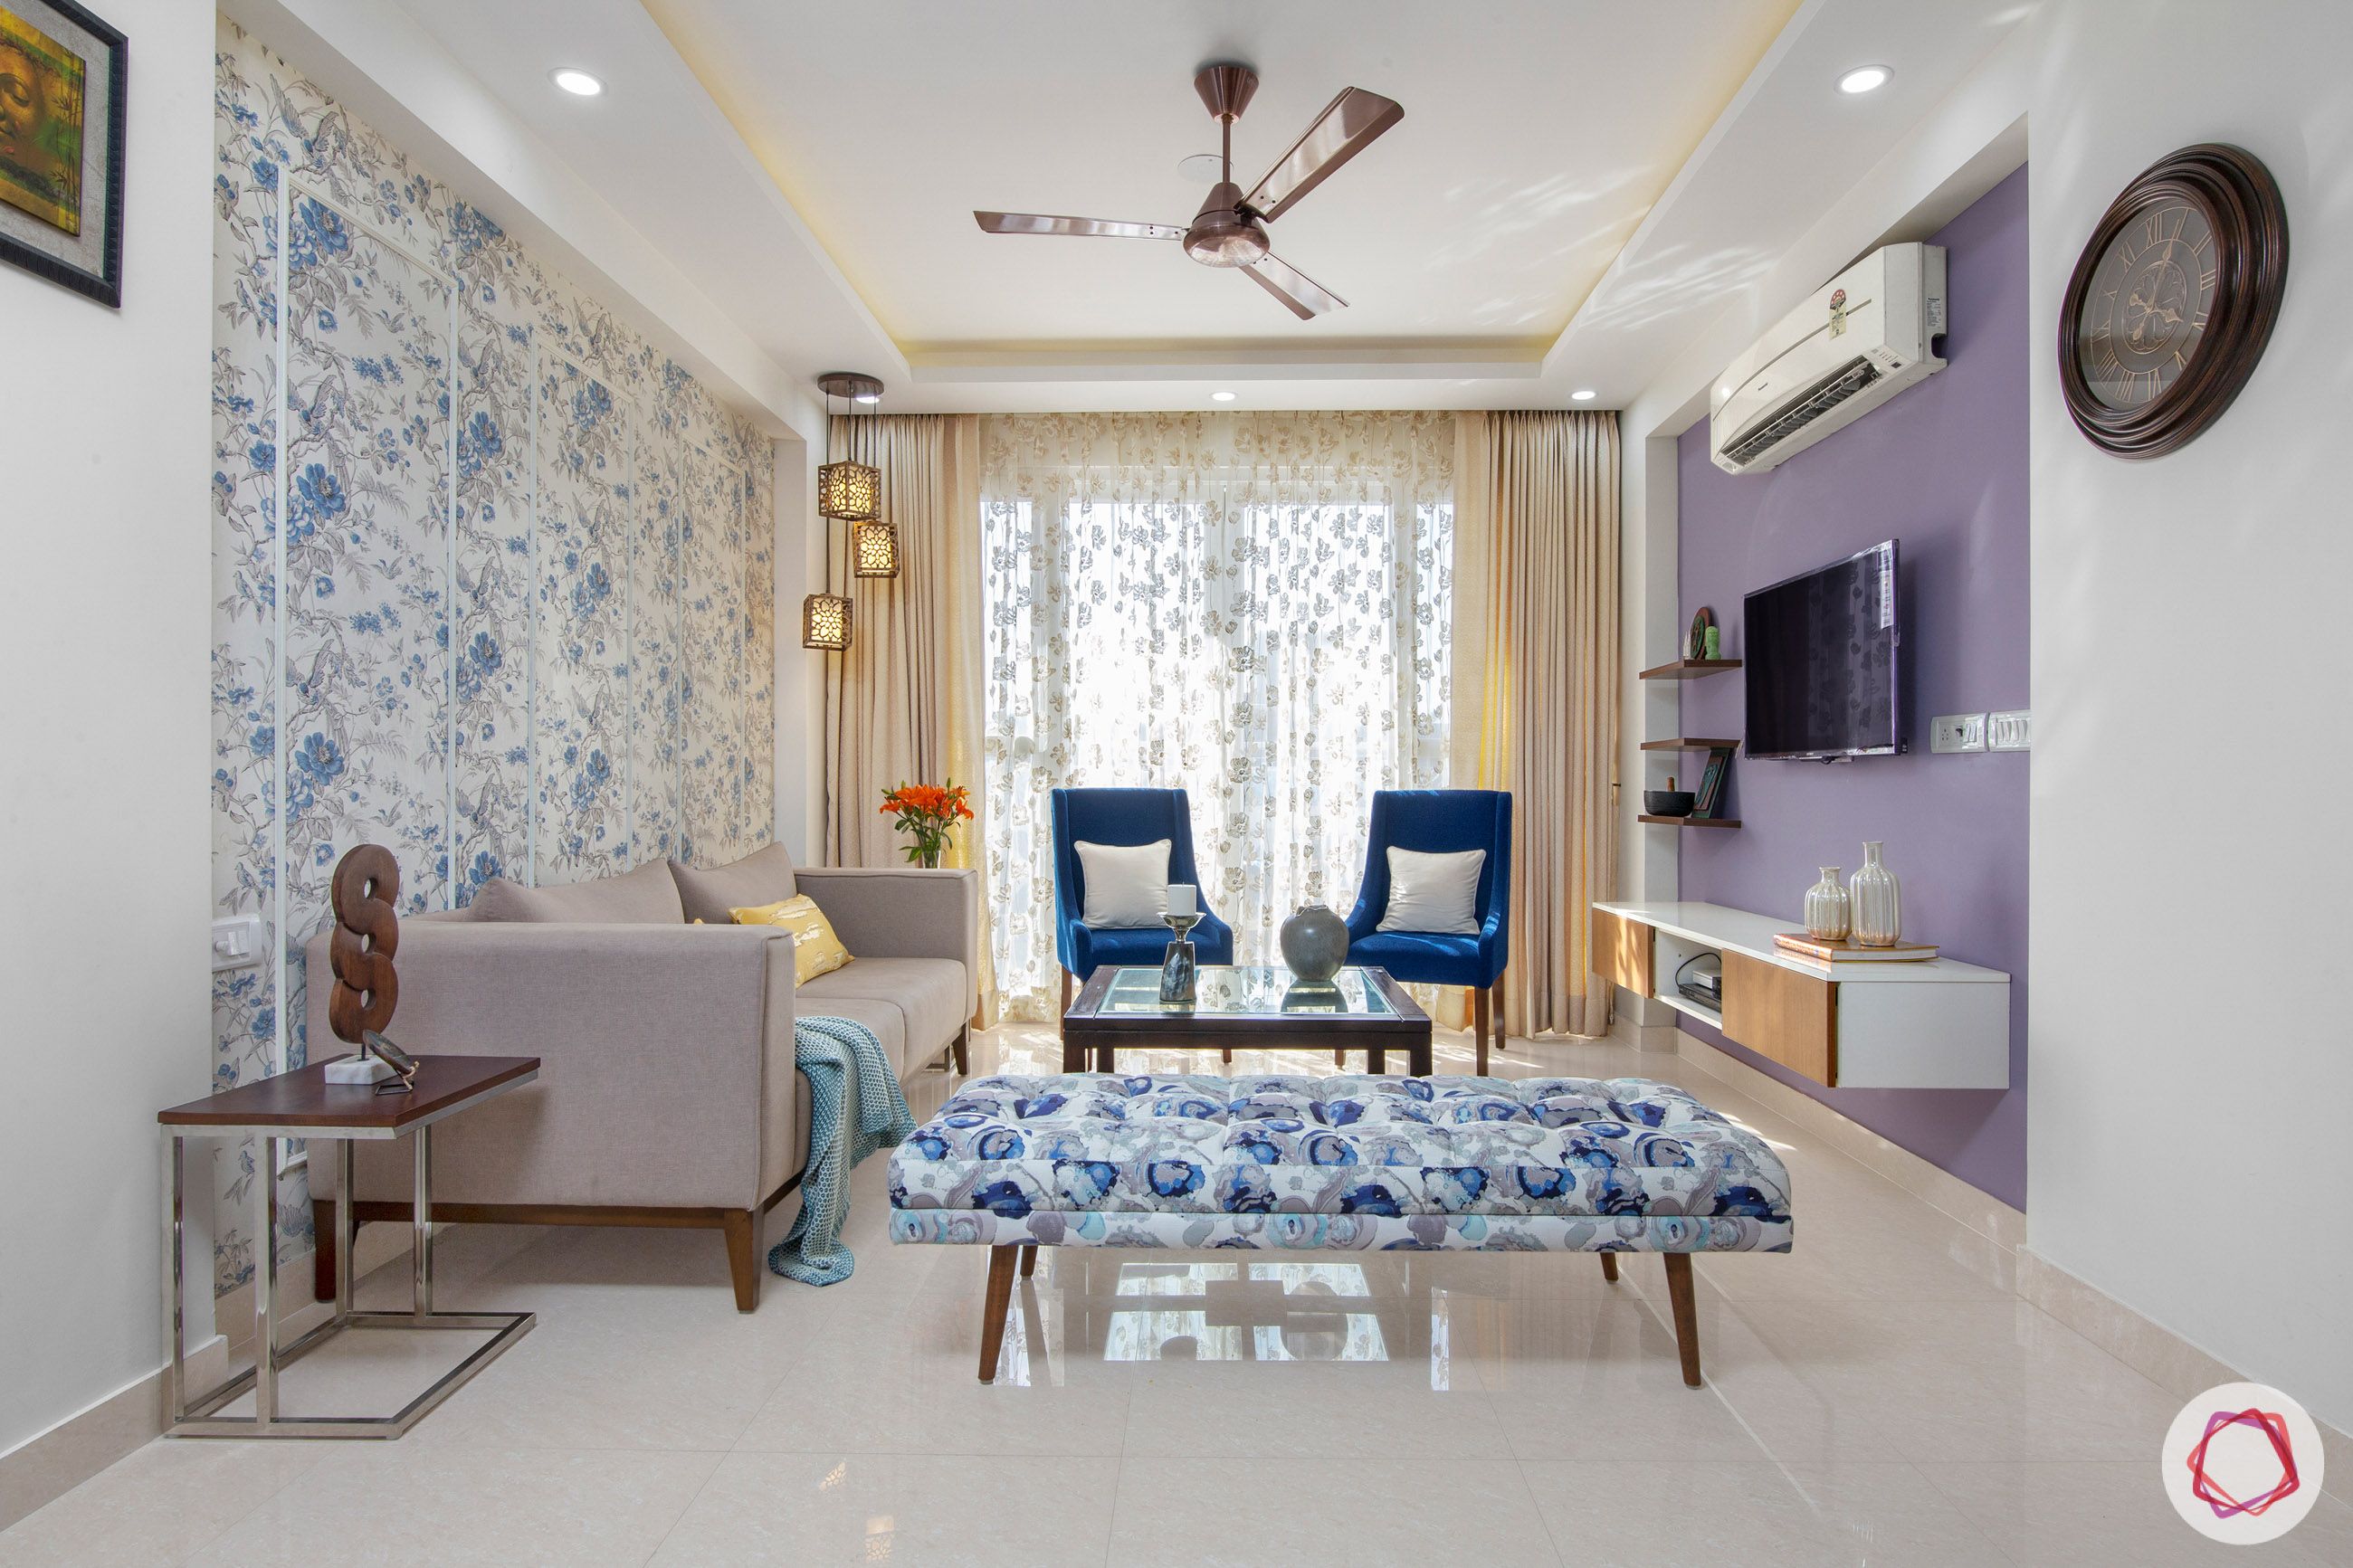 3bhk flats in dwarka-blue armchair designs-floral wallpaper designs